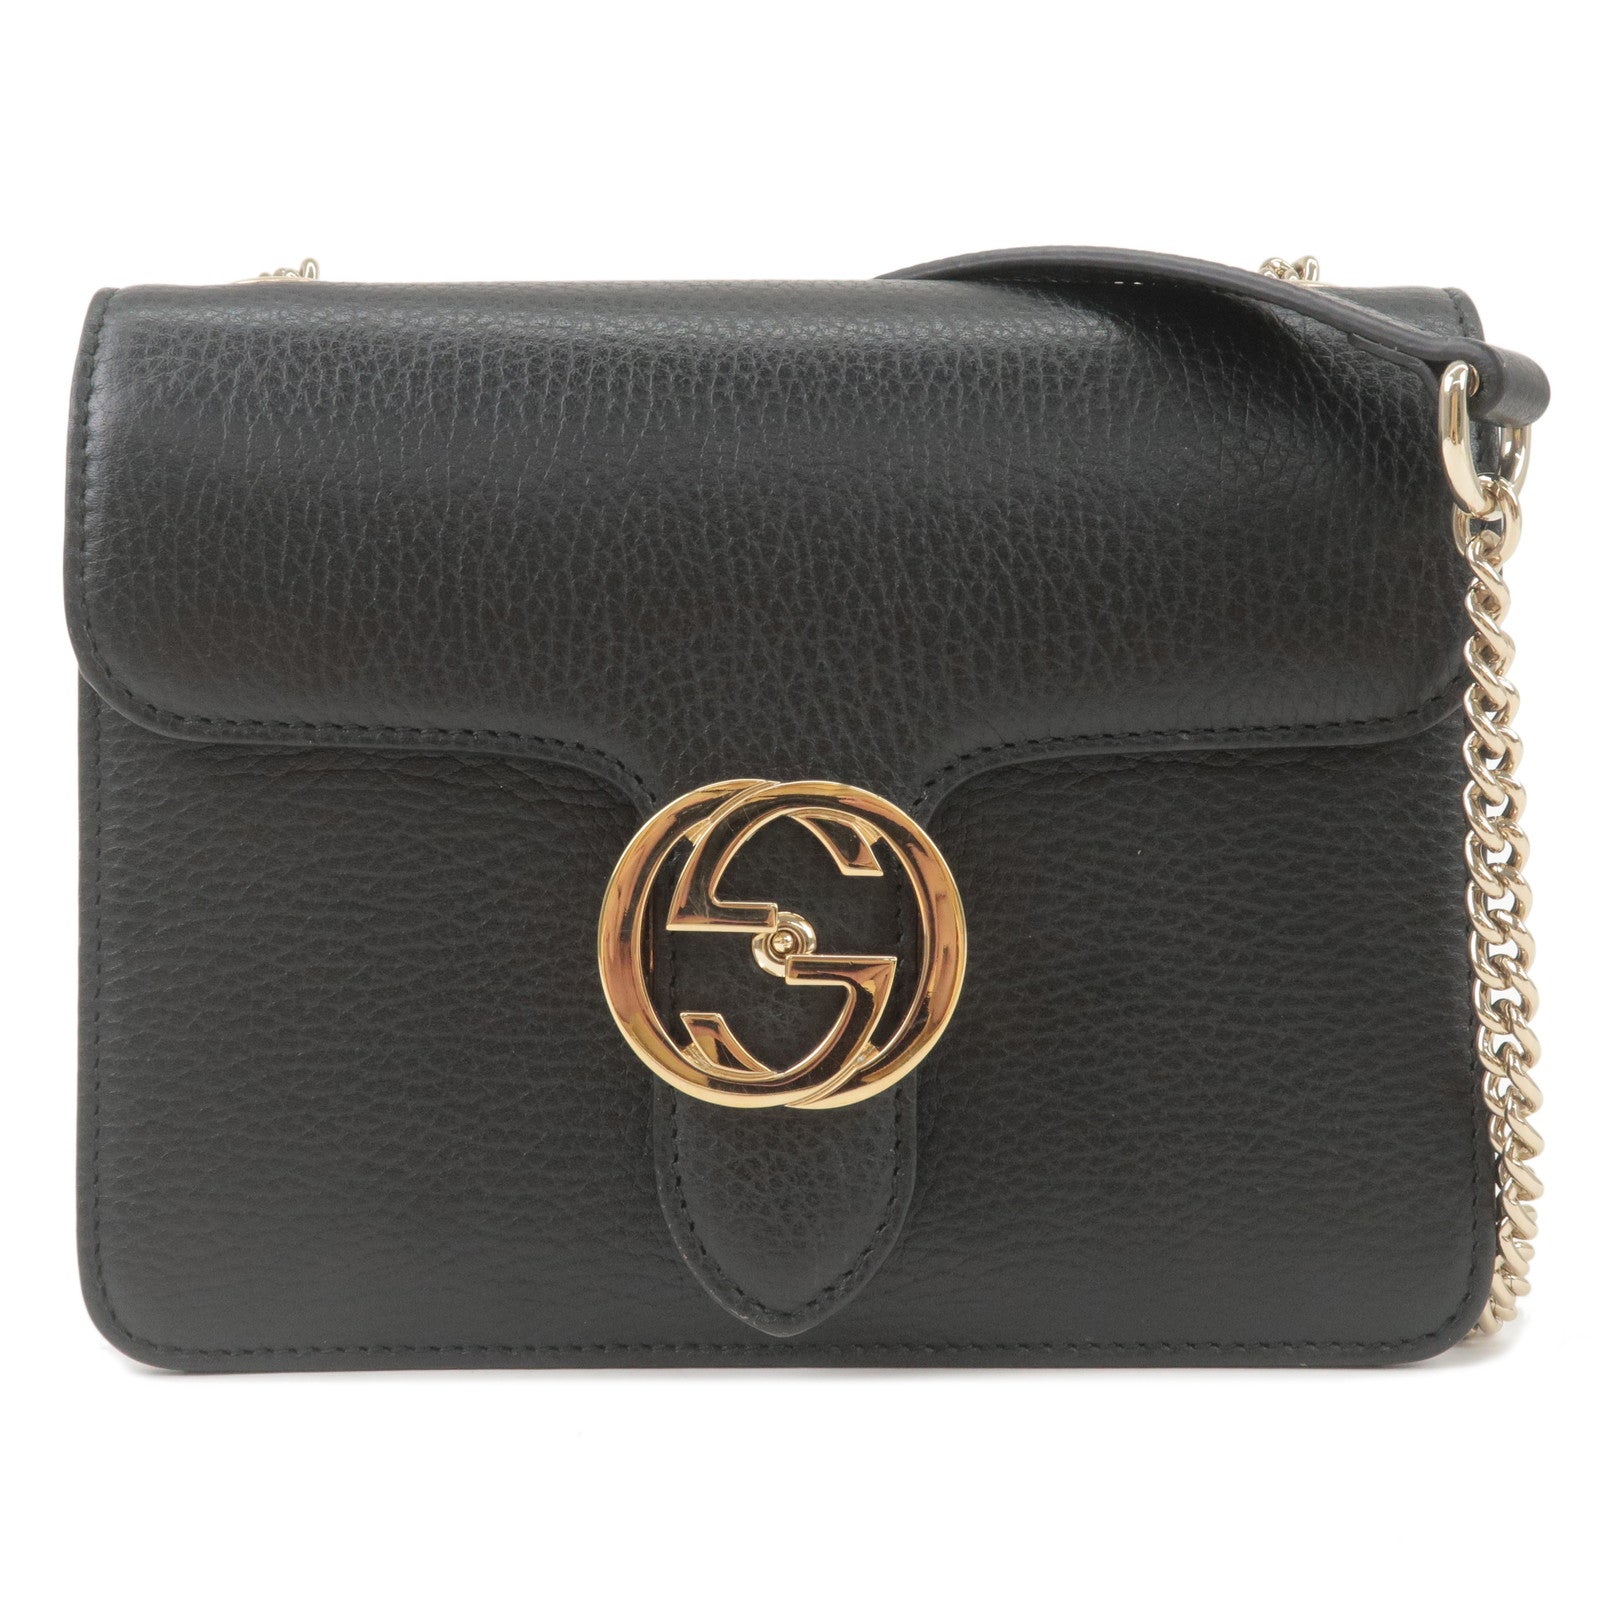 Gucci Interlocking G Leather & Chain Shoulder Bag in Black